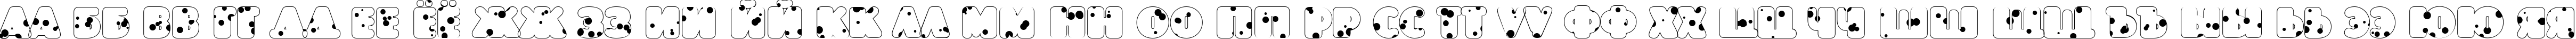 Пример написания русского алфавита шрифтом a_JasperTtlRndDrNord